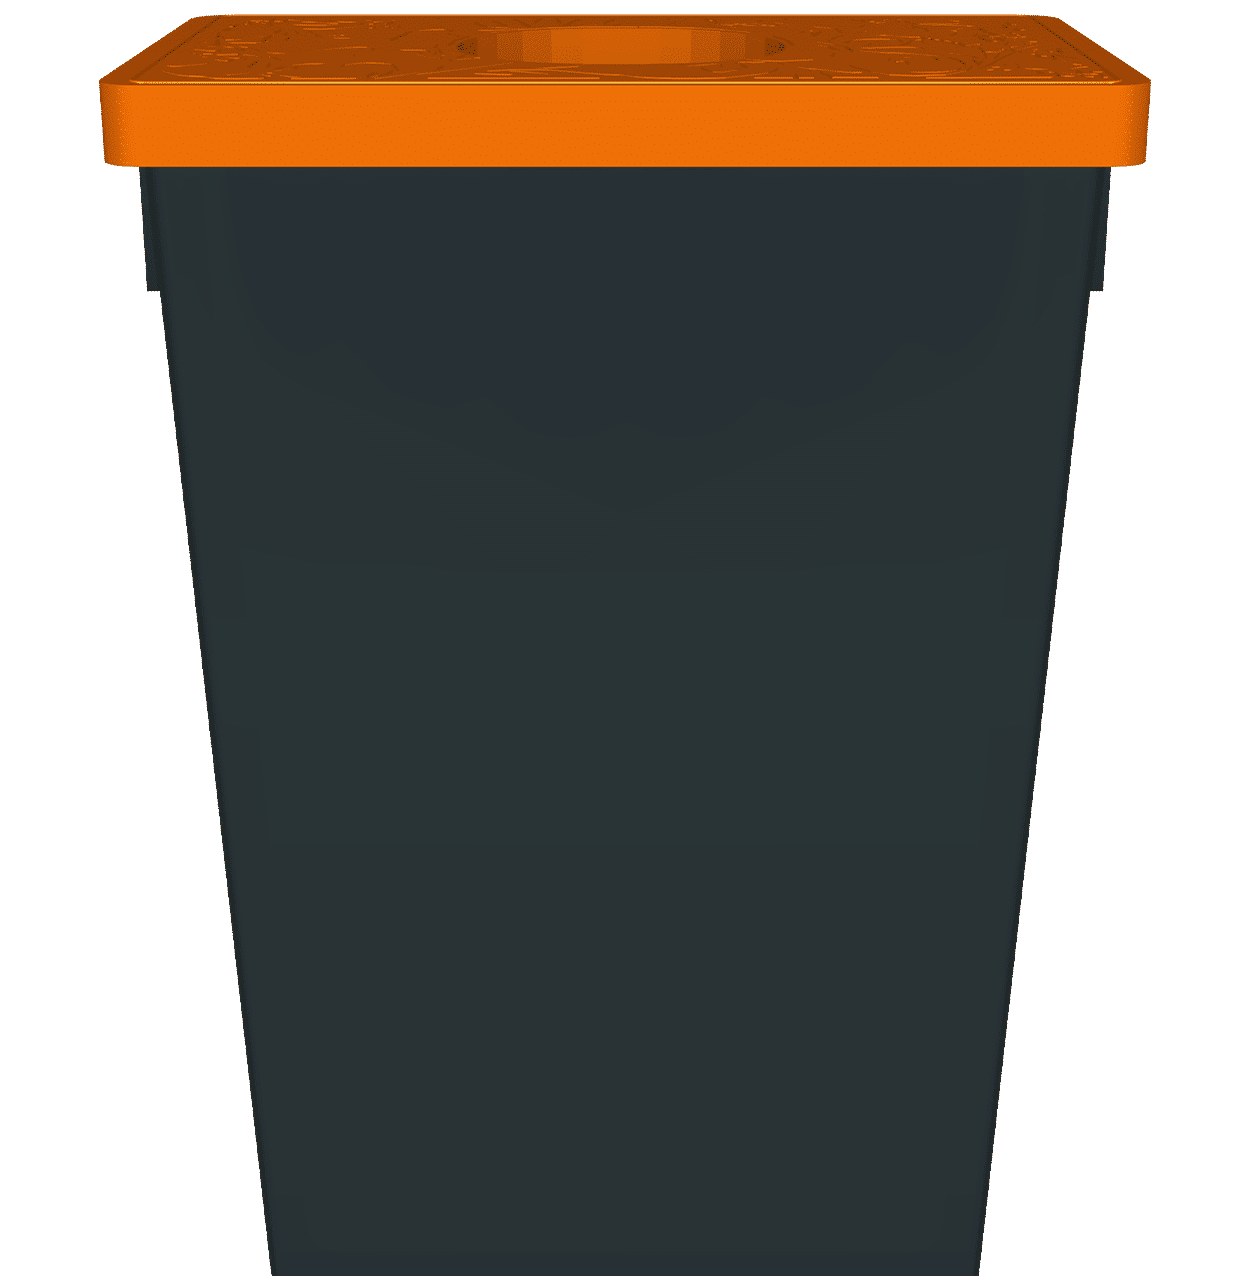 greenoffice-recycling-bin-triade-product